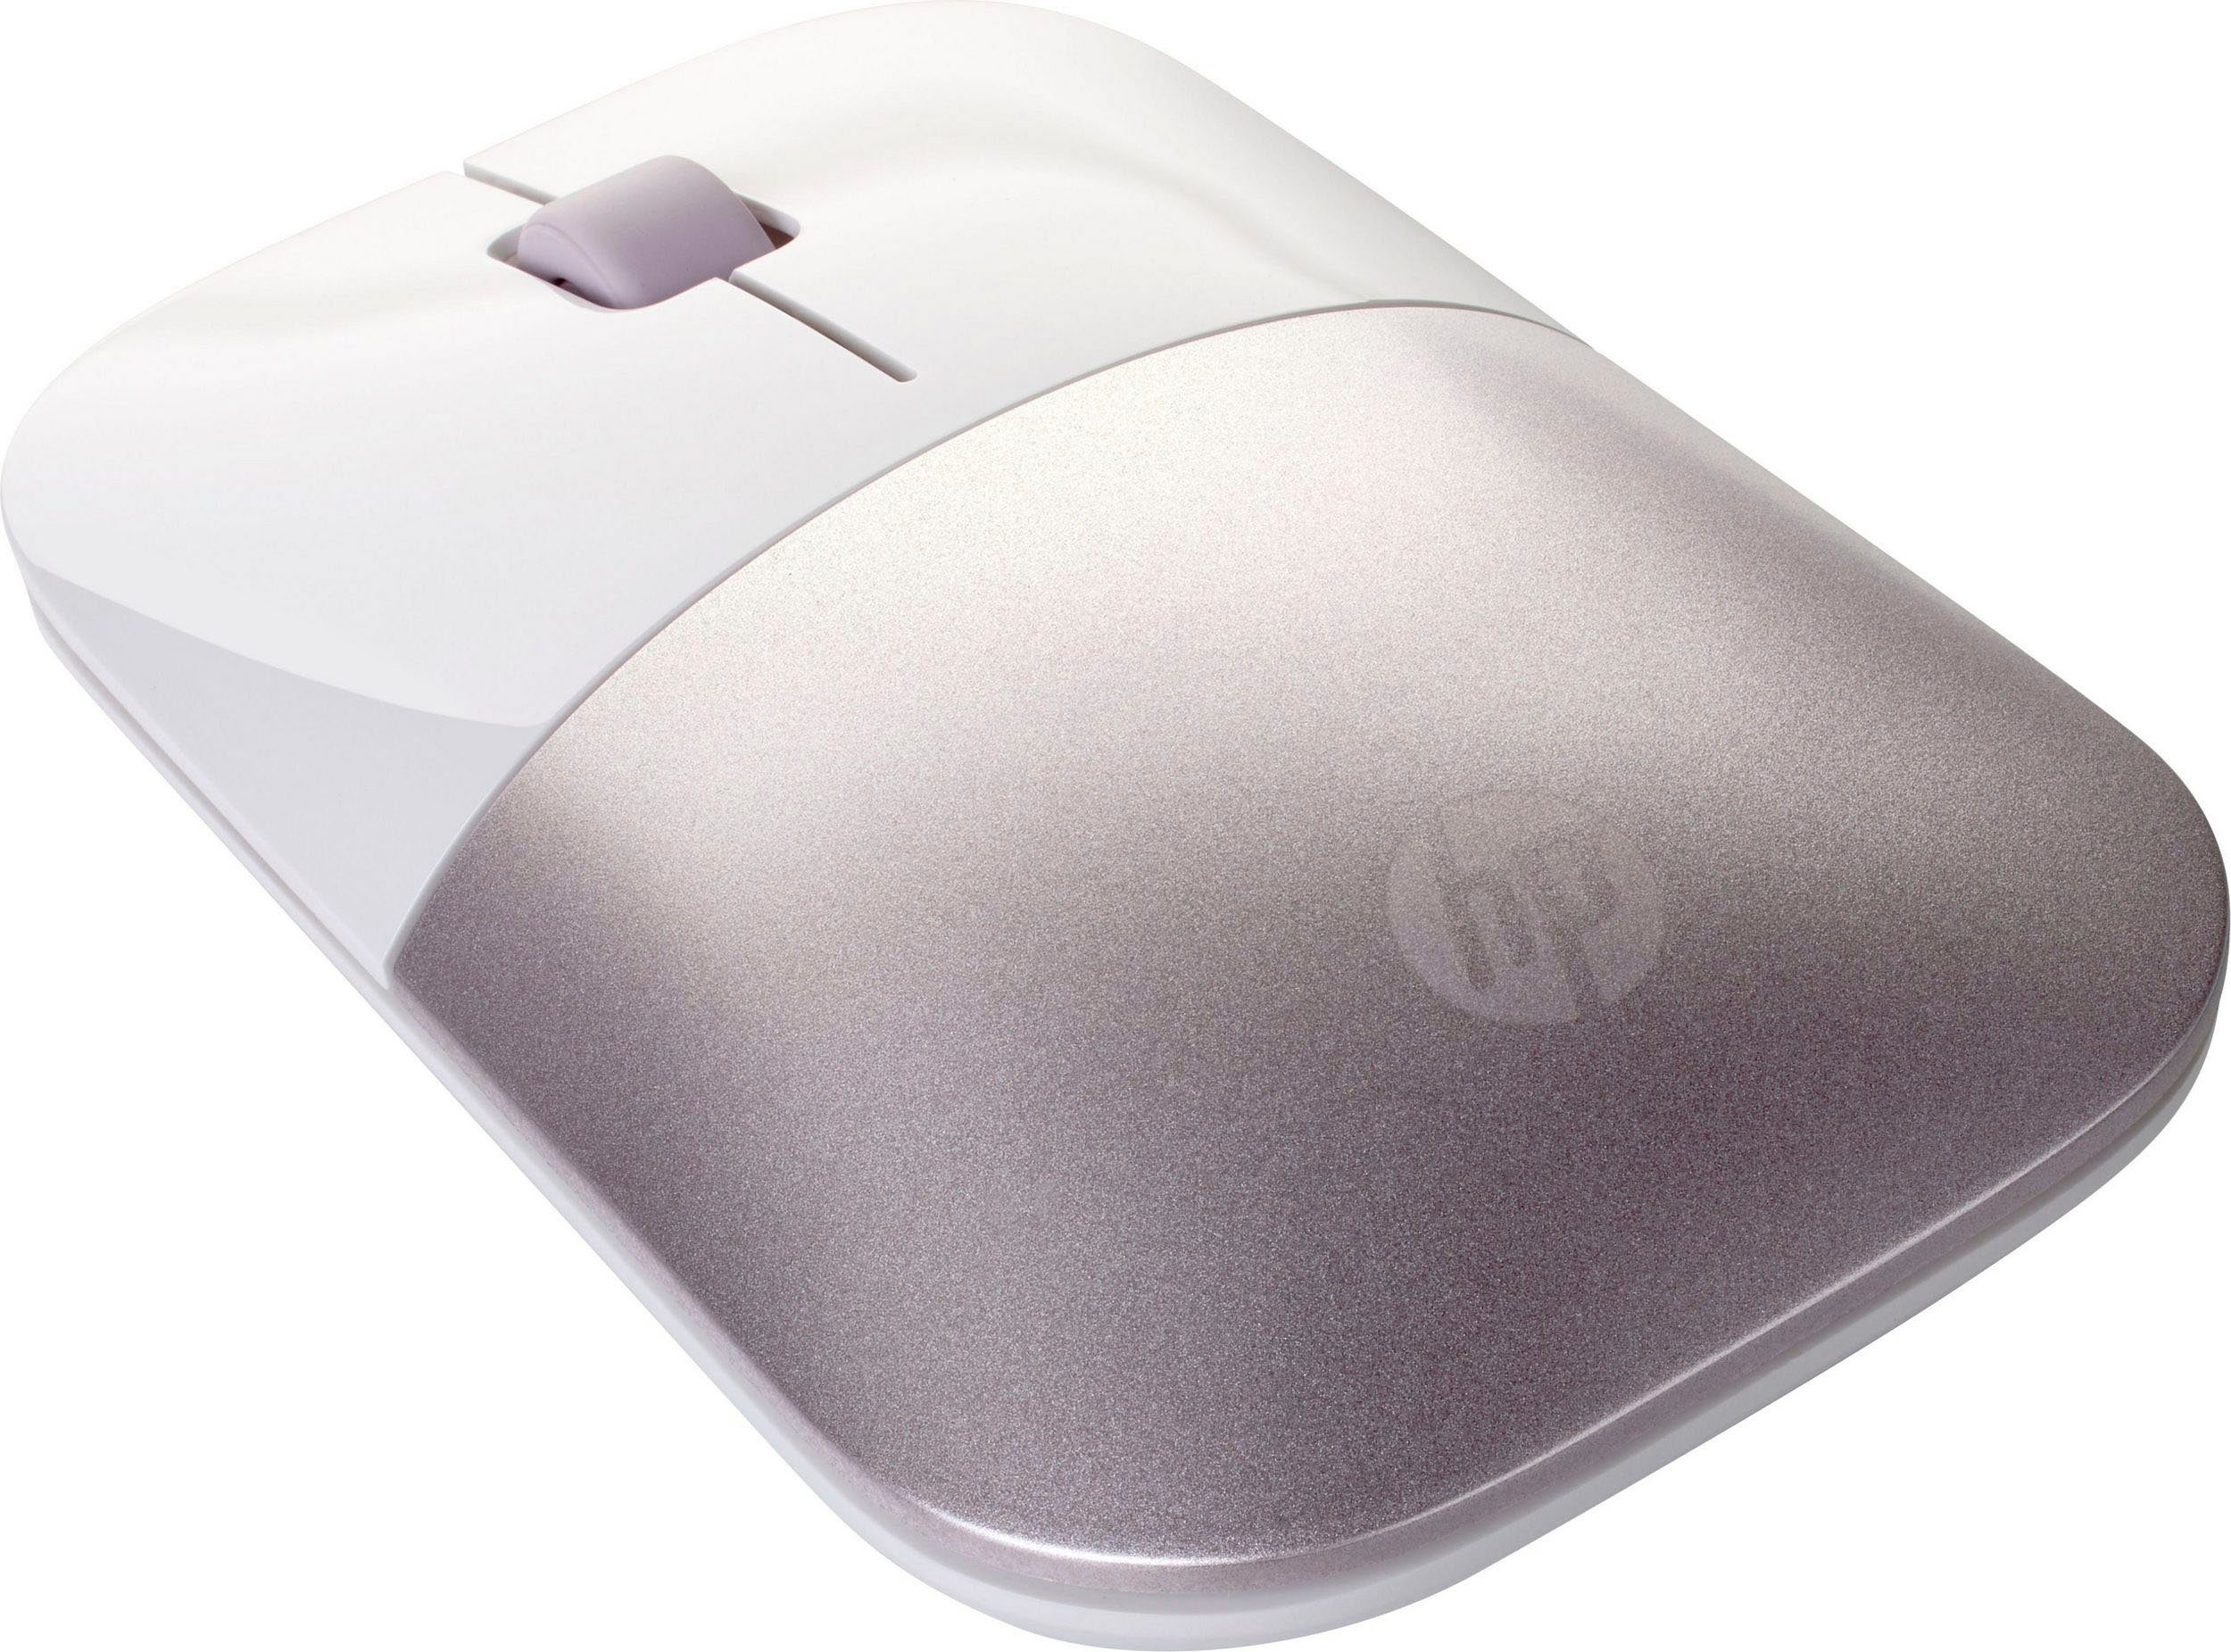 HP Z3700 weiß/rosa Maus